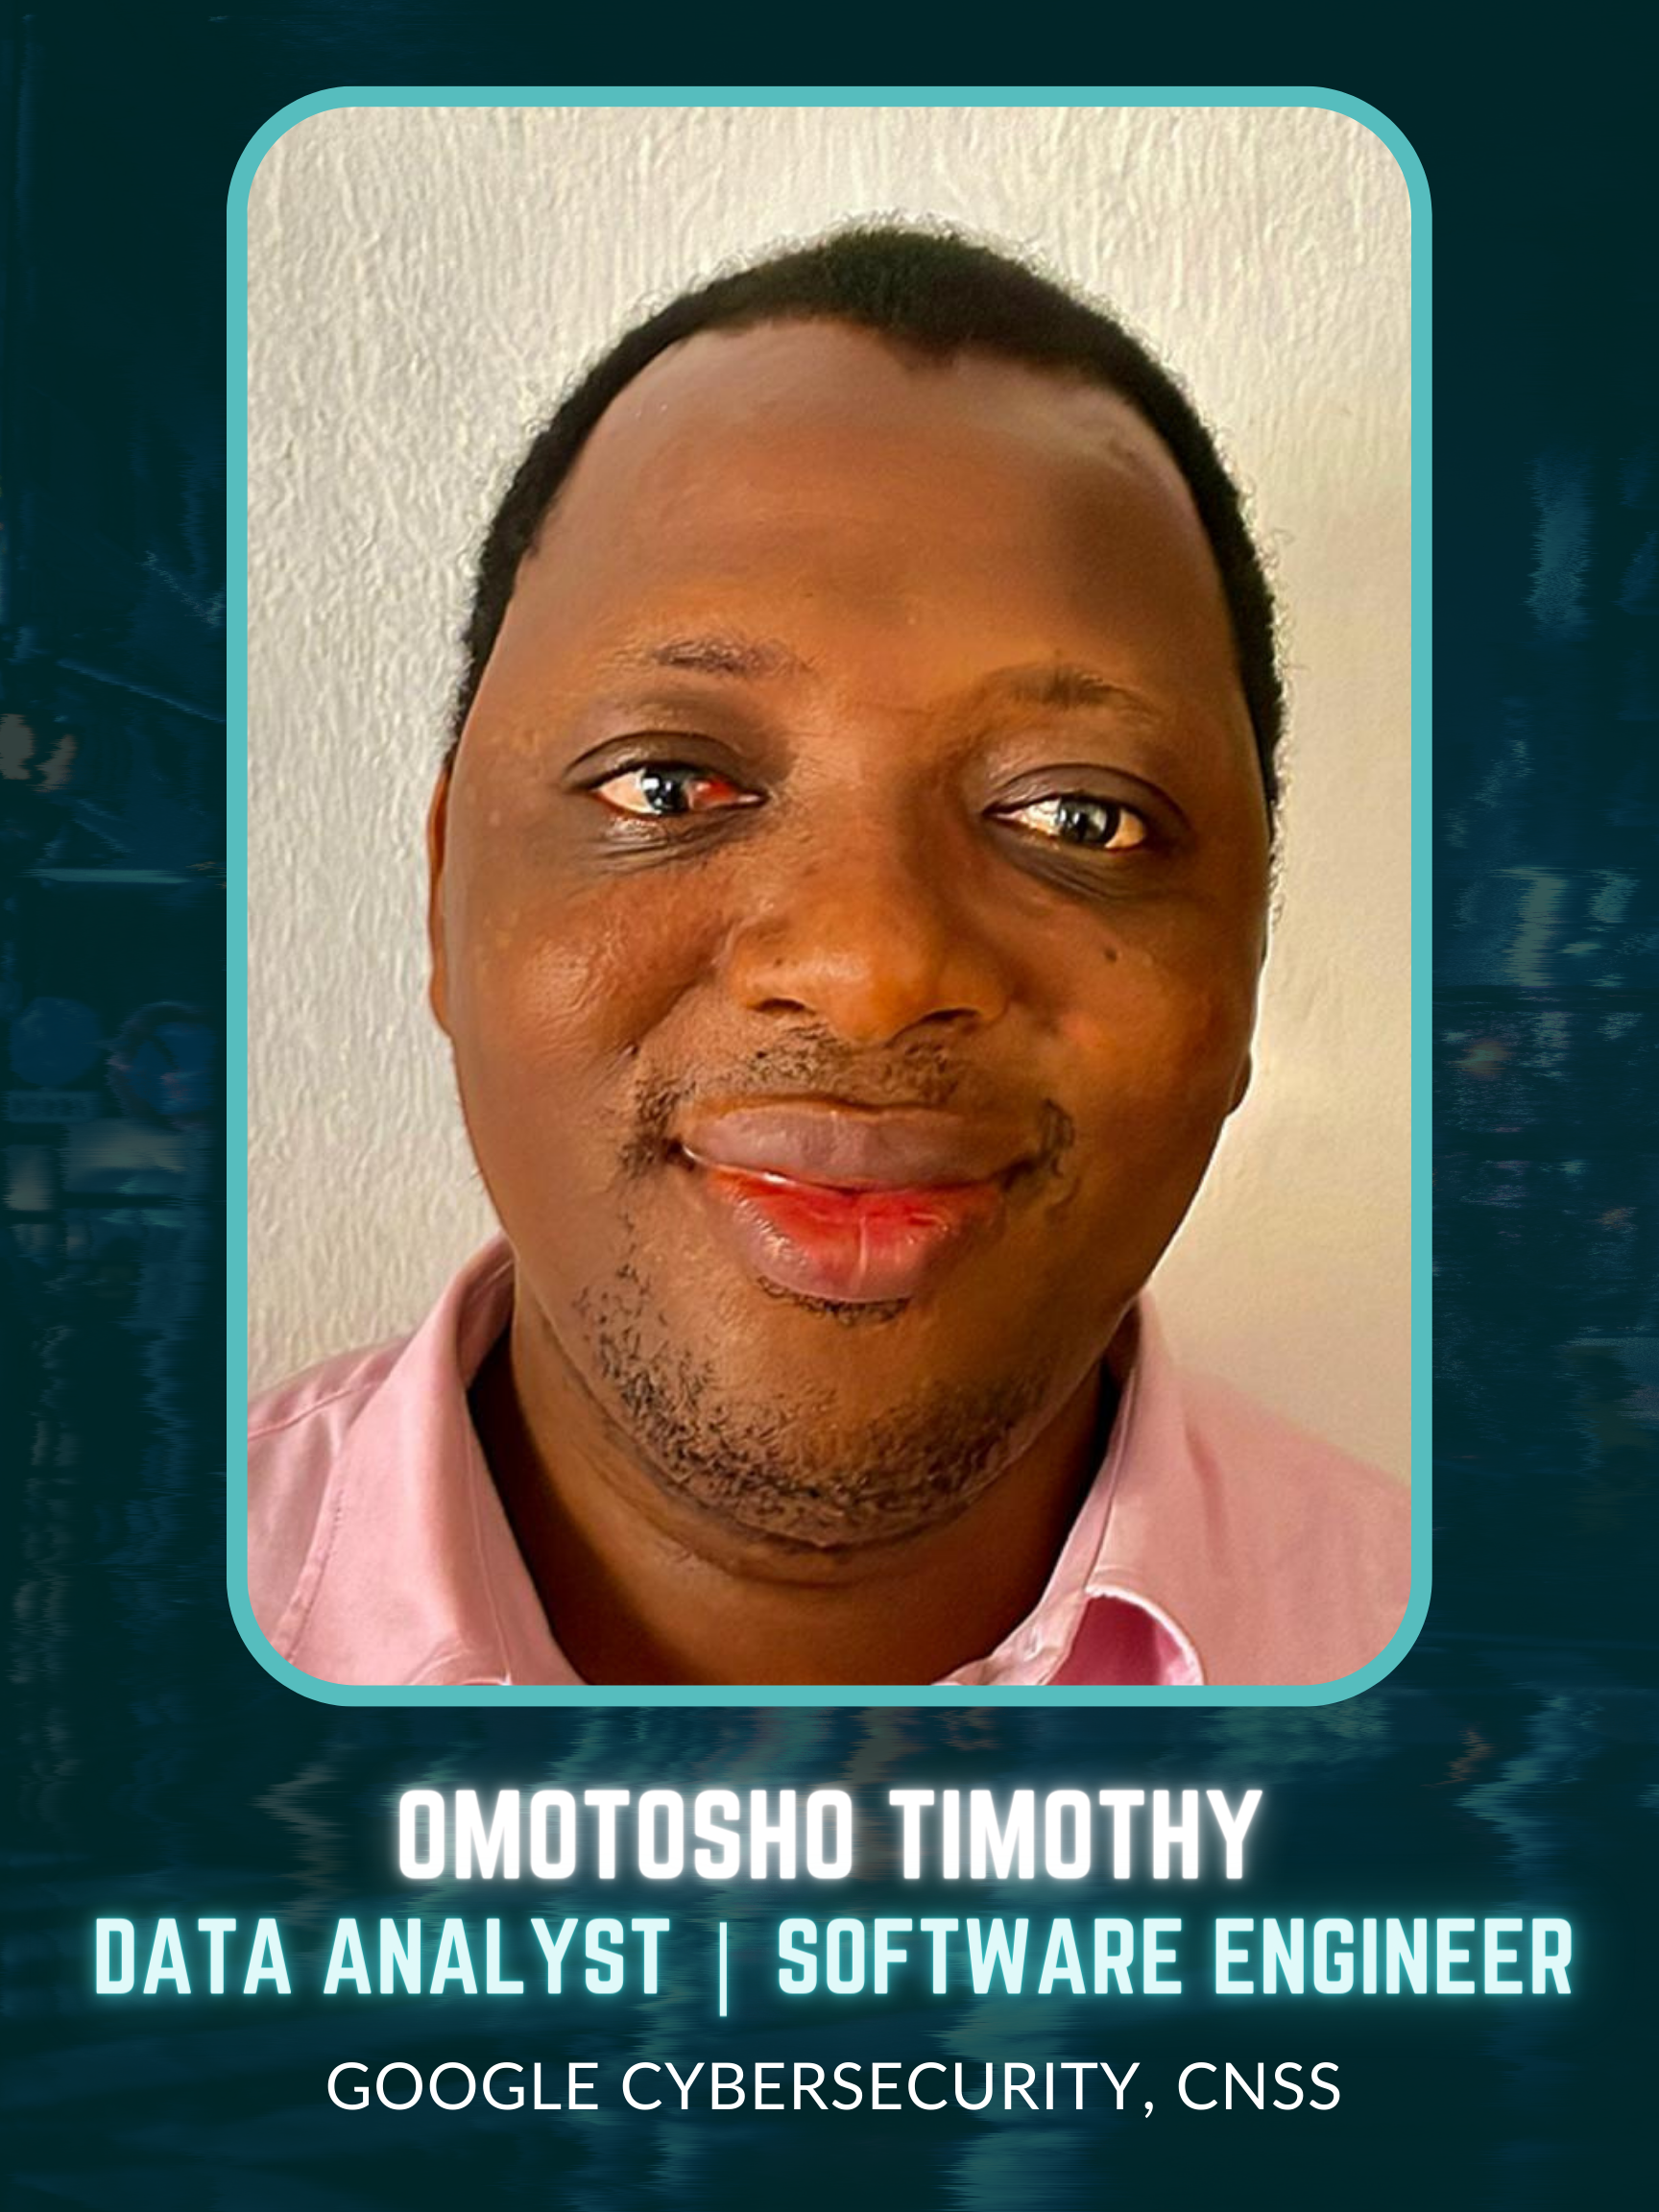 OMOTOSHO Timothy